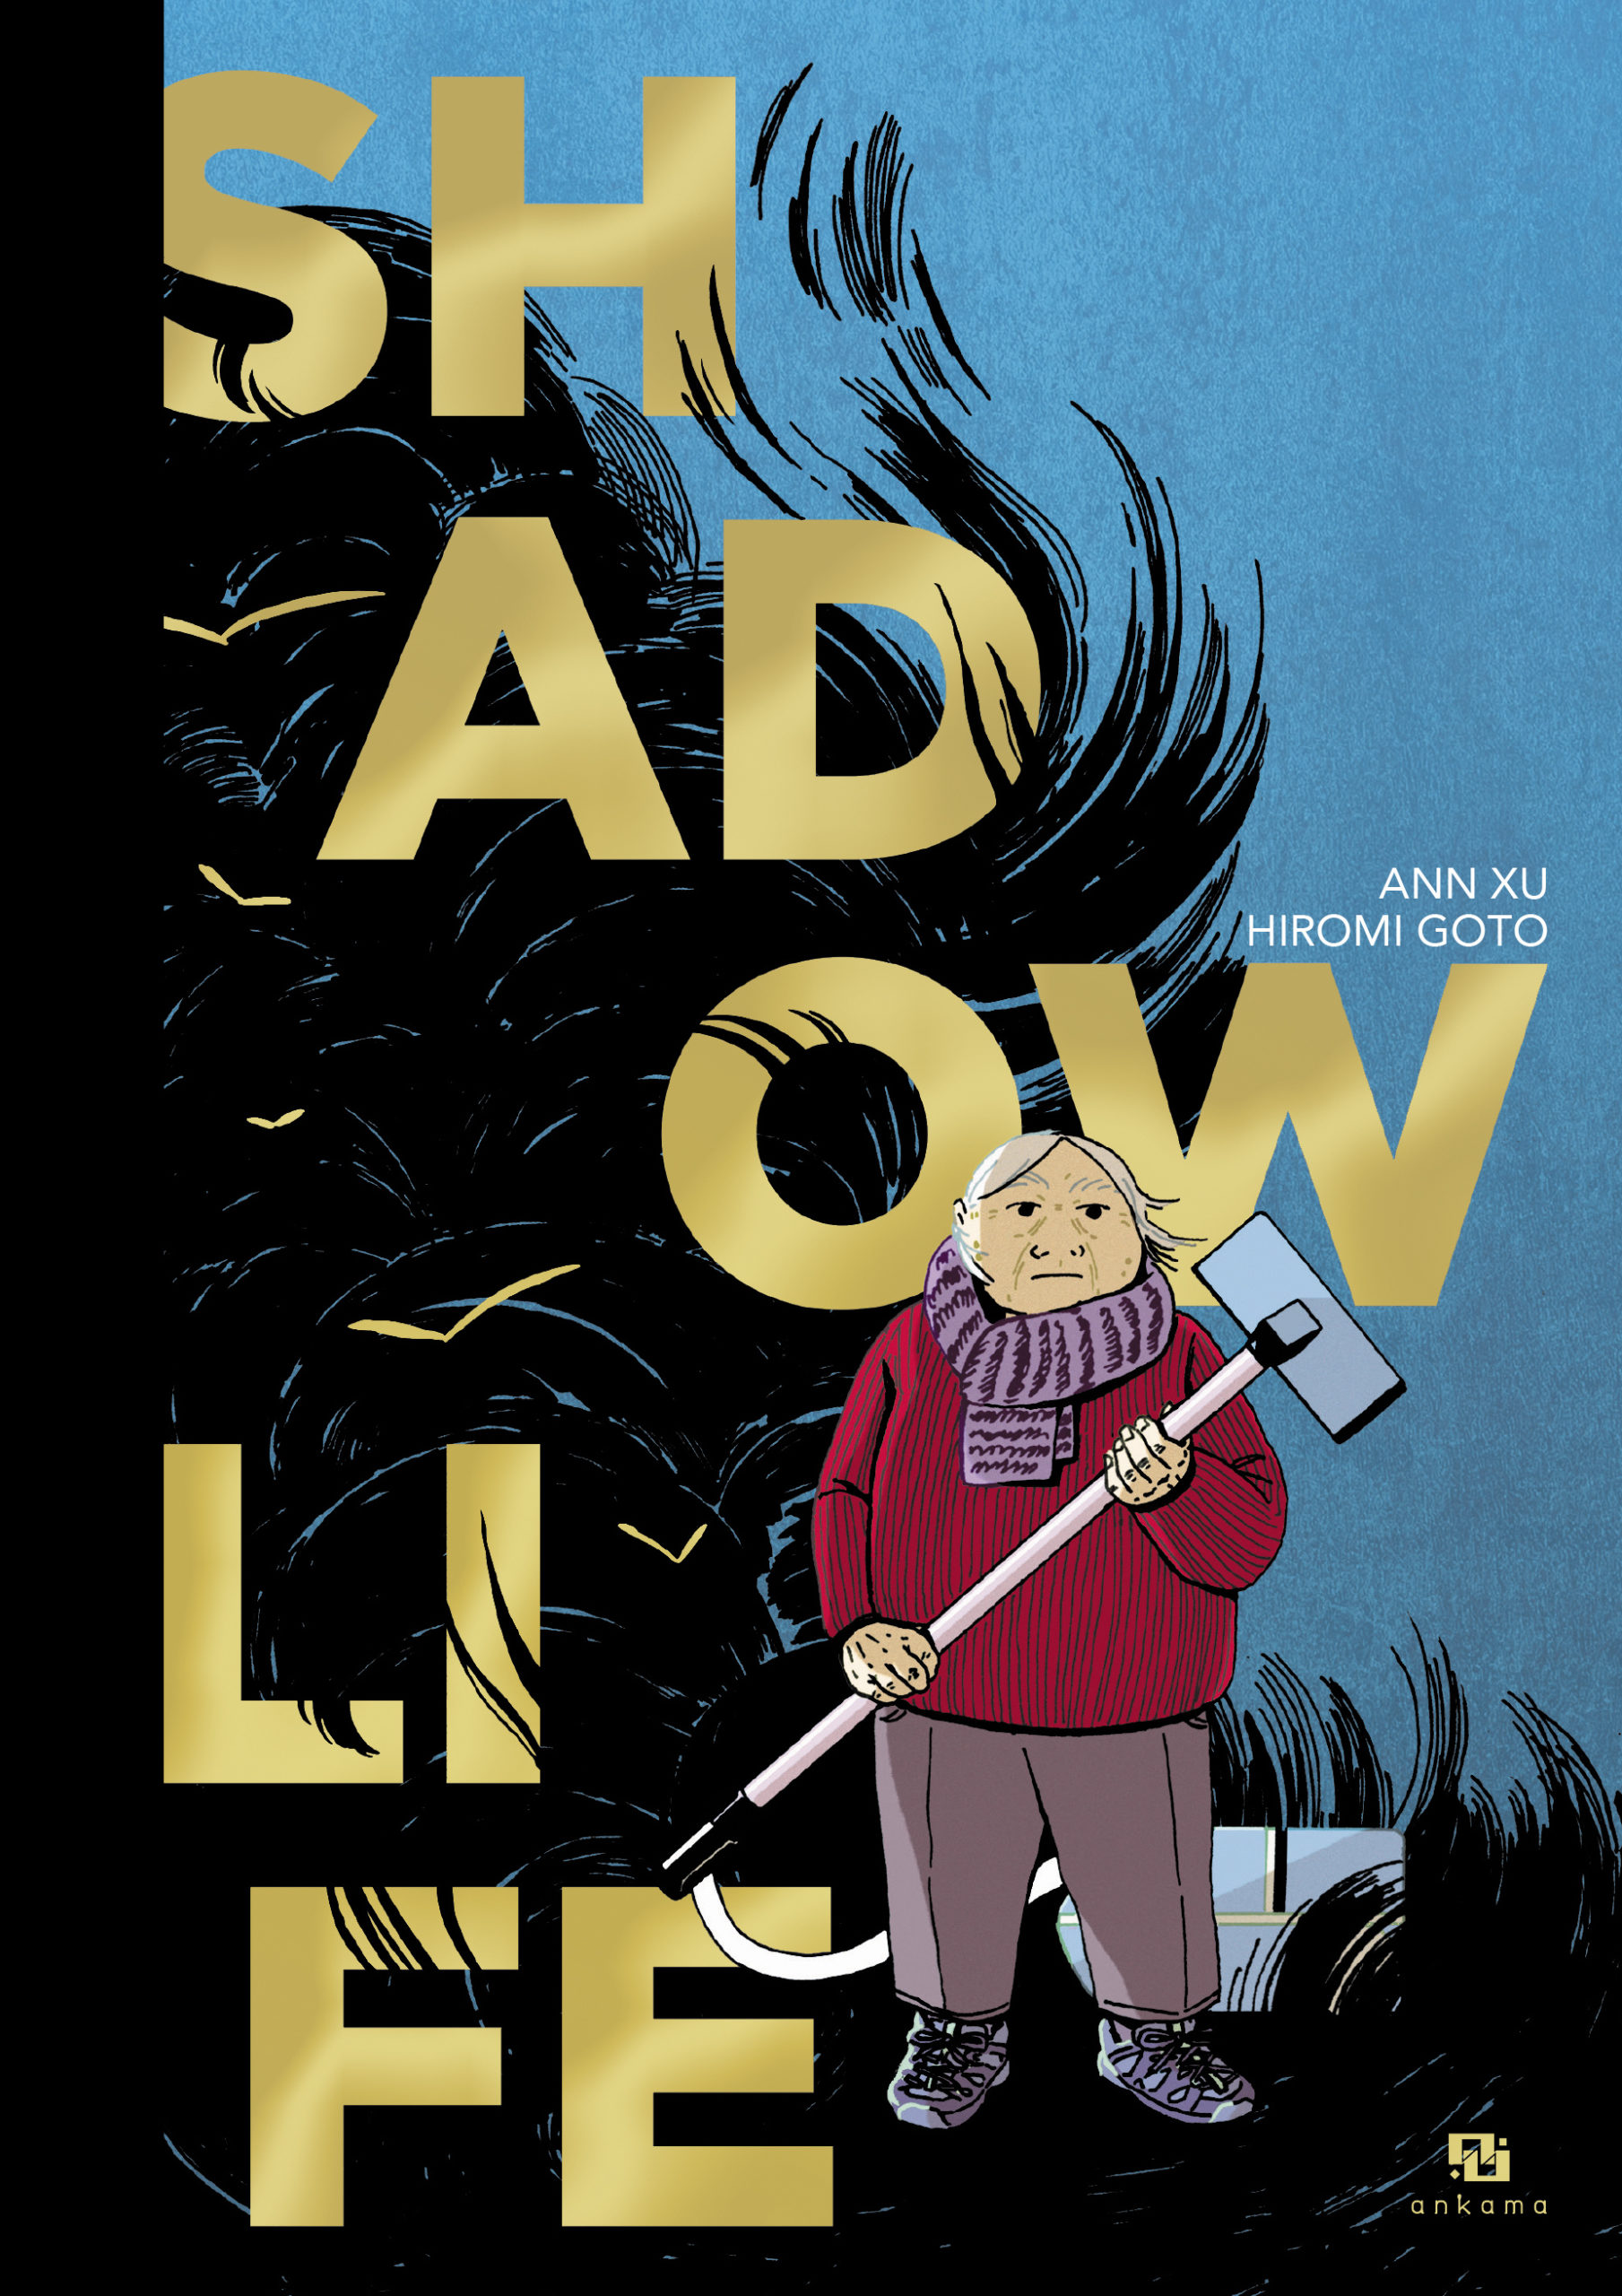 Shadow Life d’Hiromi Goto (scénario)  et Ann Xu (dessin) paraît  aux éditions Ankama.